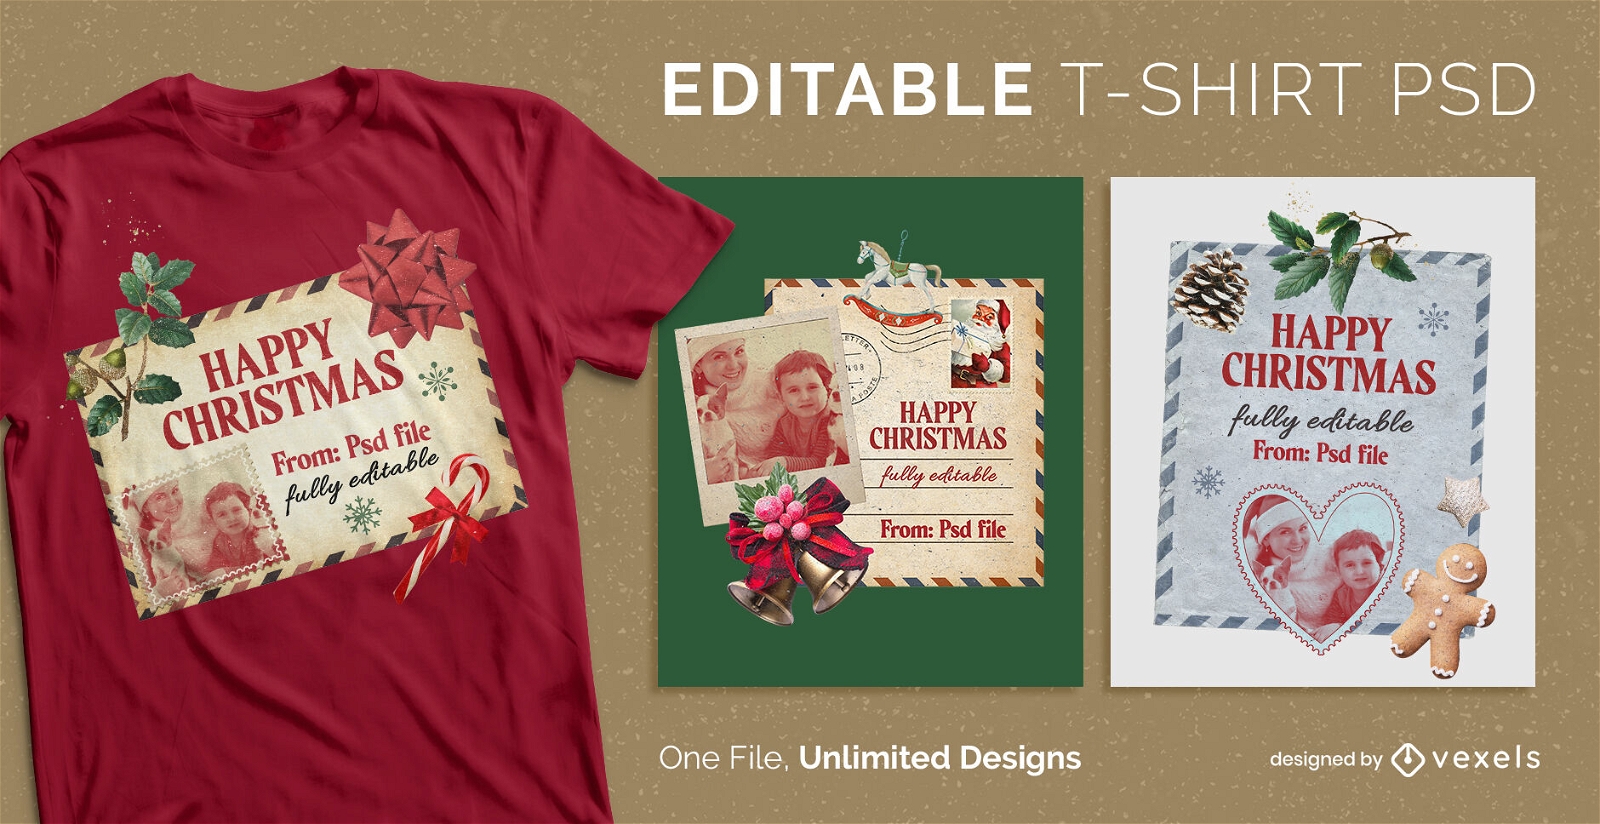 Christmas postcards scalable t-shirt psd